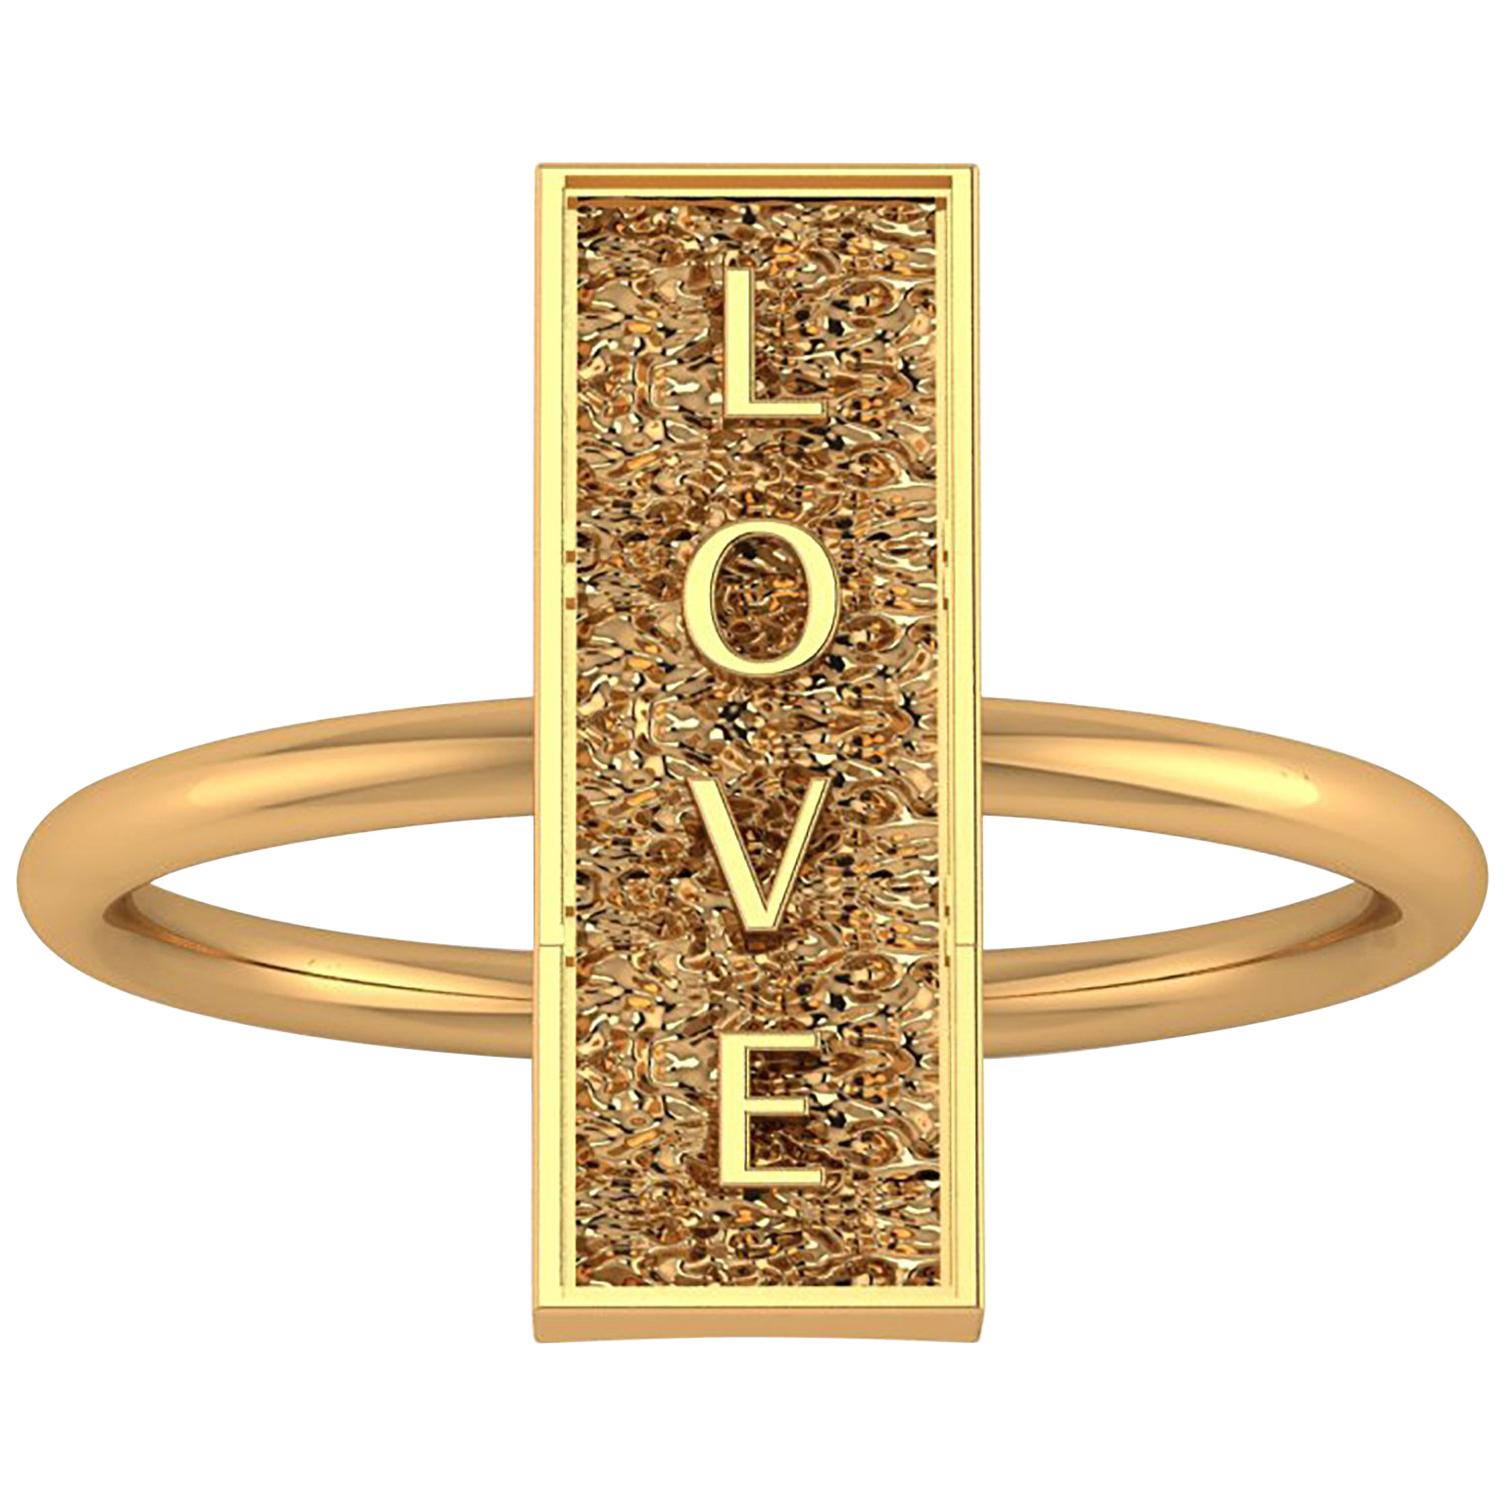 18 Karat Gold Ring Everlasting Love Sculpted in the Rock Ferrucci